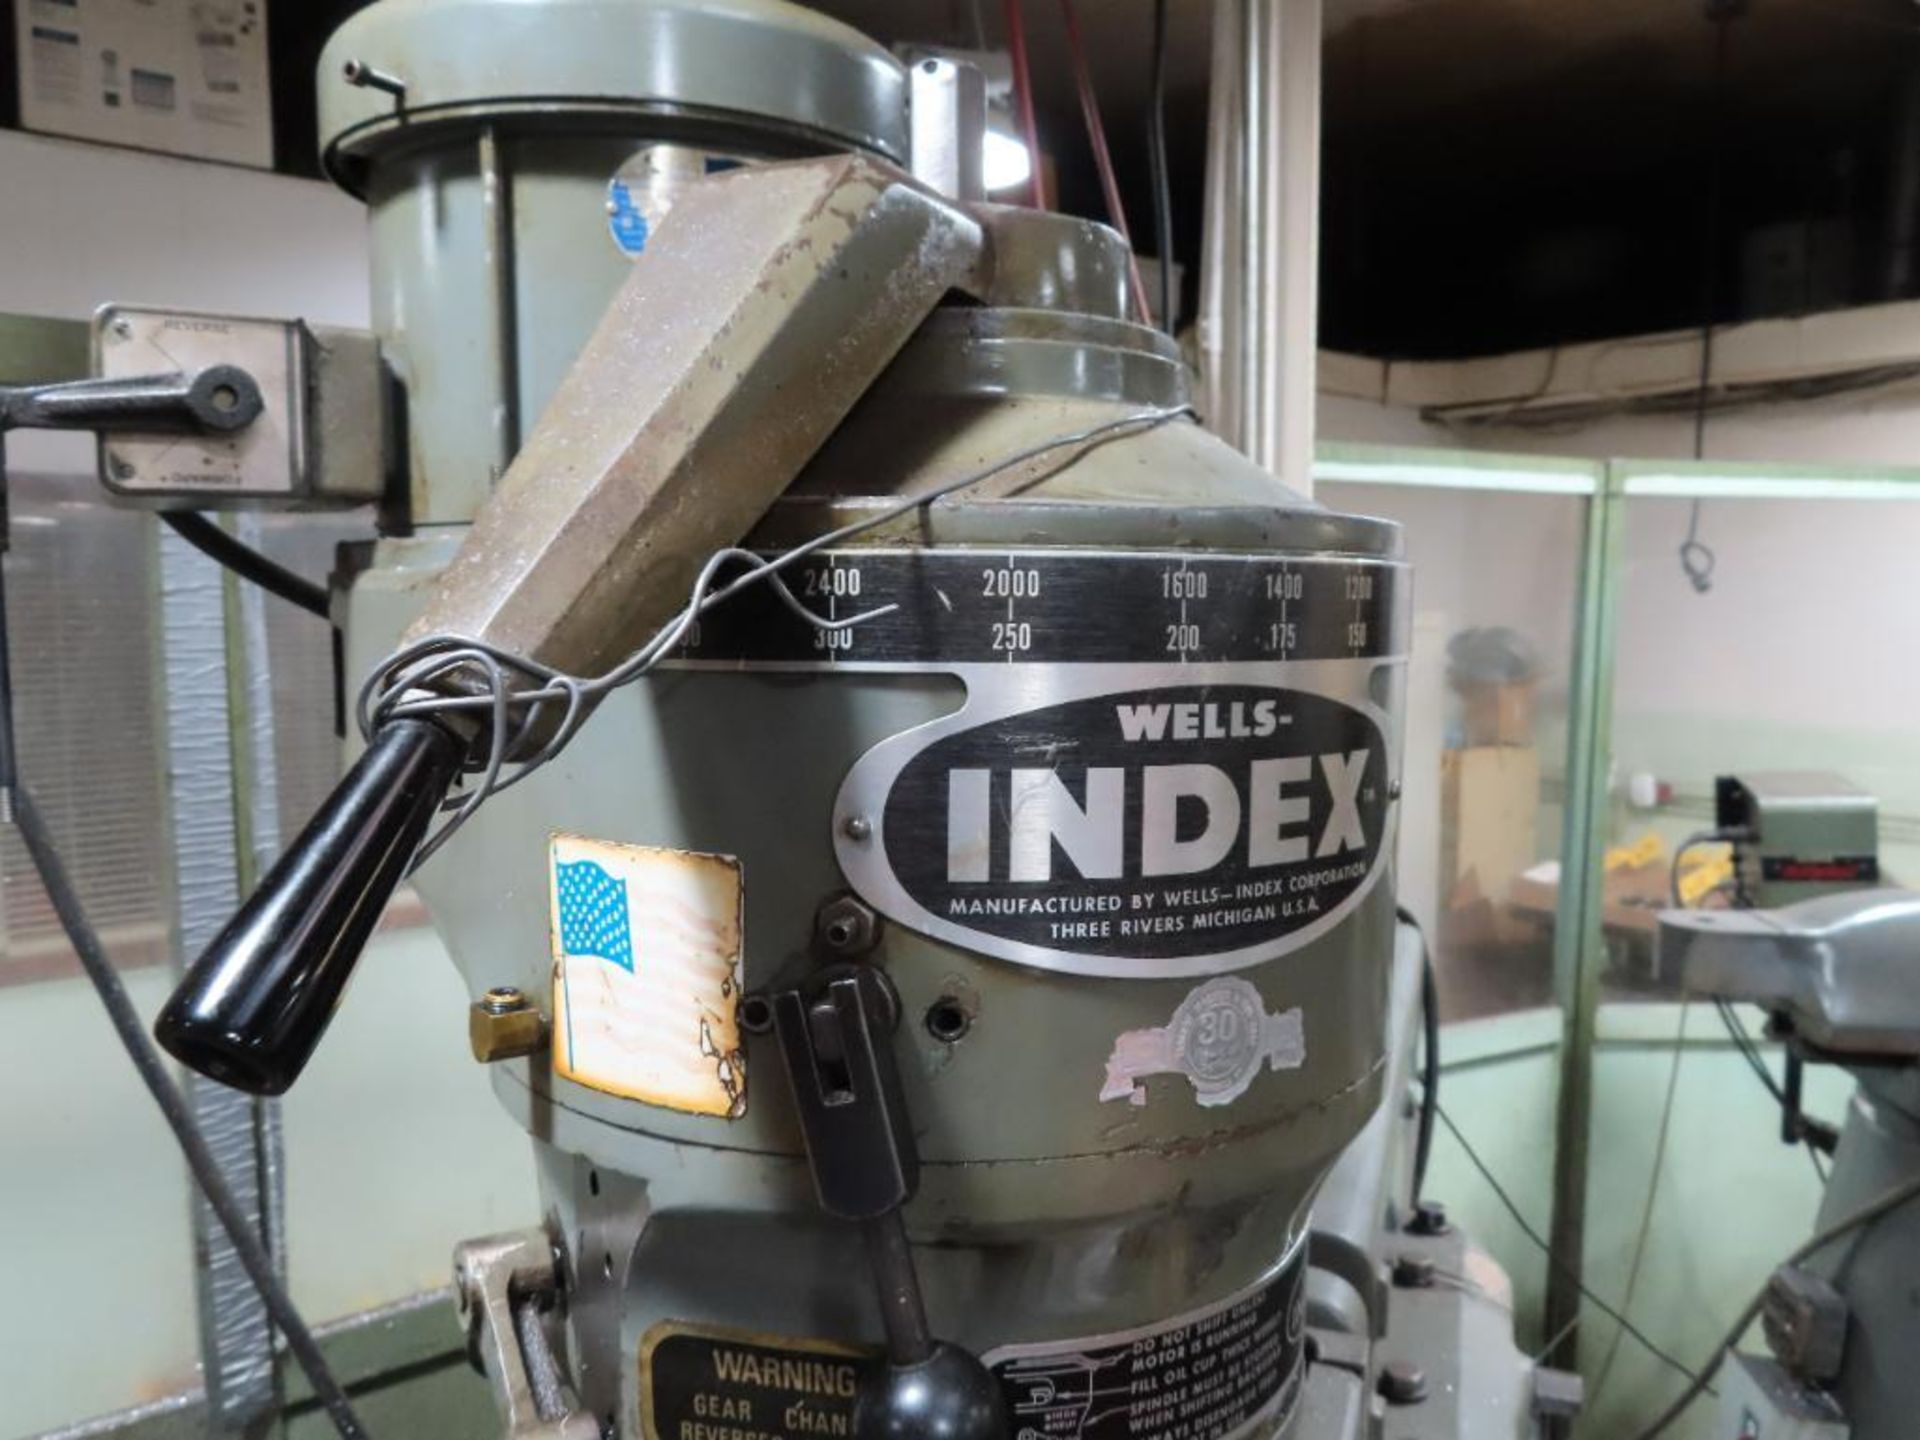 Wells Index Vertical Milling Machine Mdl.847, S/N:22335 - Image 4 of 4